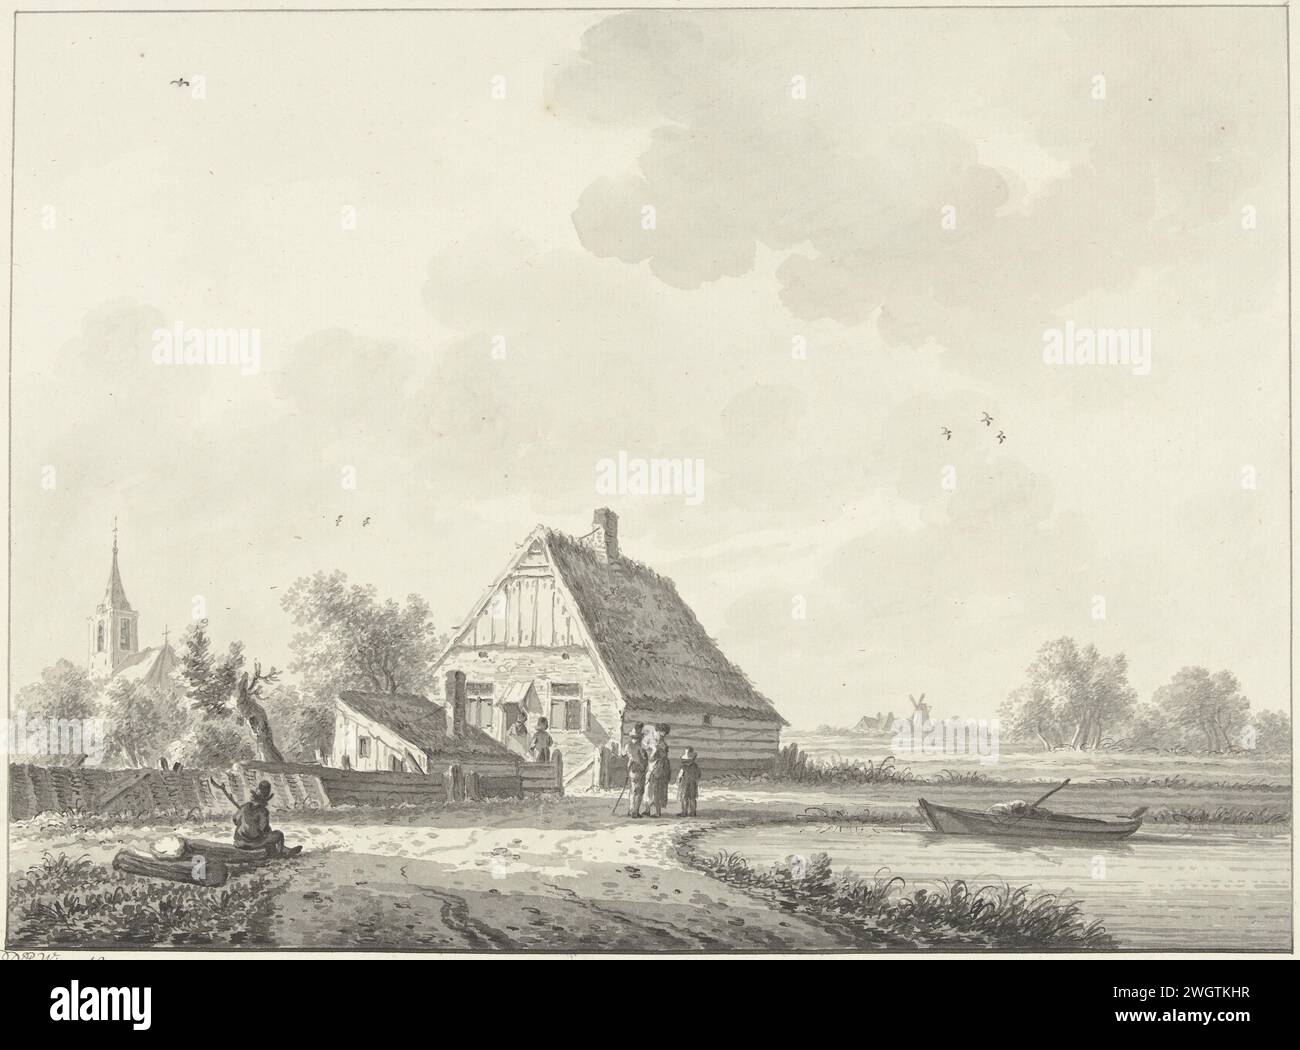 The village of Drumpt in Gelderland, Nicolaas Wicart, 1758 - 1815 drawing   paper. ink pen / brush farm (building) Drumpt Stock Photo